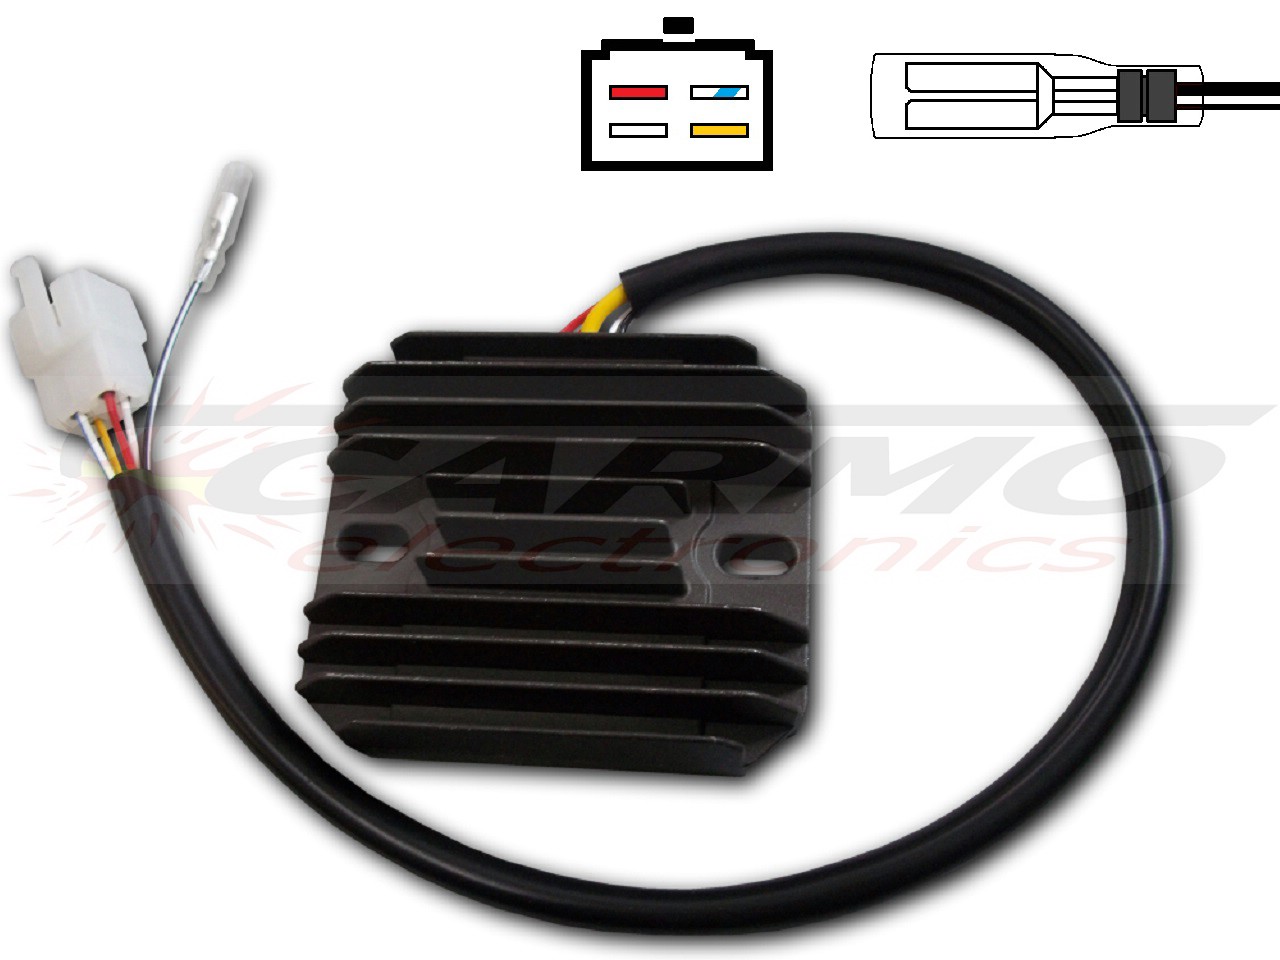 CARR111 - Suzuki MOSFET Spanningsregelaar gelijkrichter (32800-24500 / 32800-24501 / 32800-43410) - Clique na Imagem para Fechar